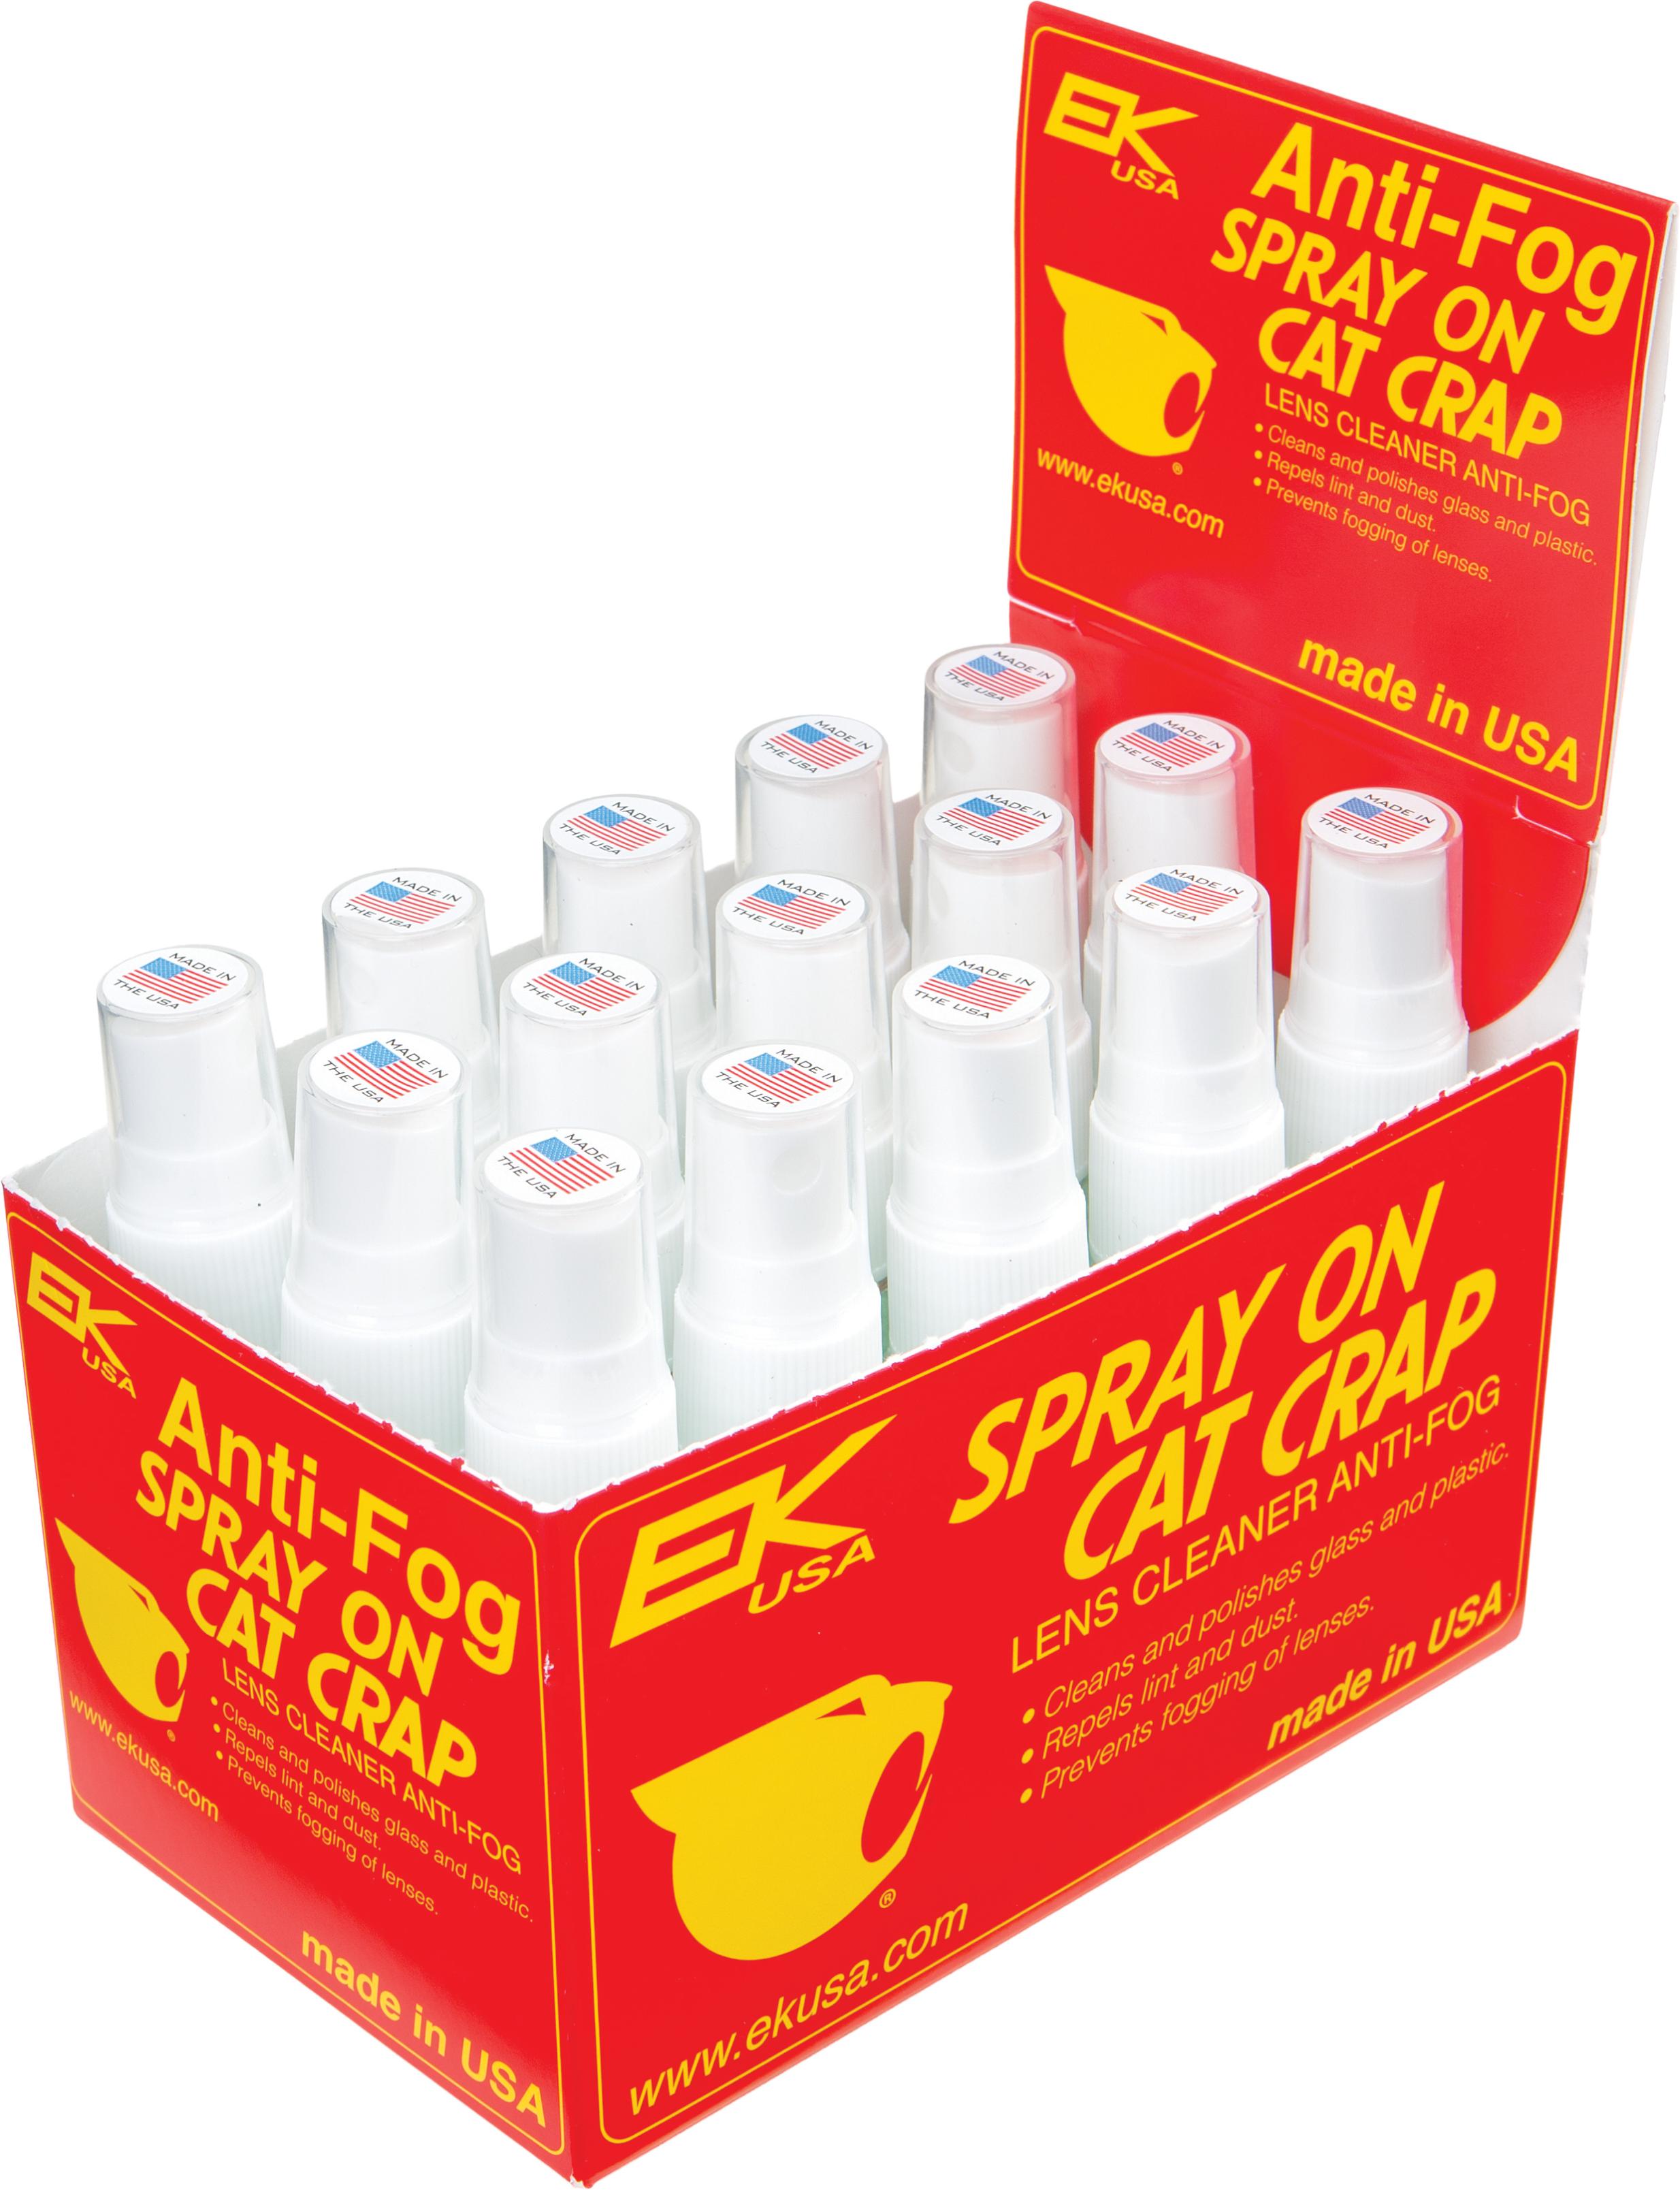 Cat Crap - Anti-fog Lens Cleaner Spray On 1oz 15/pk Display - 10851